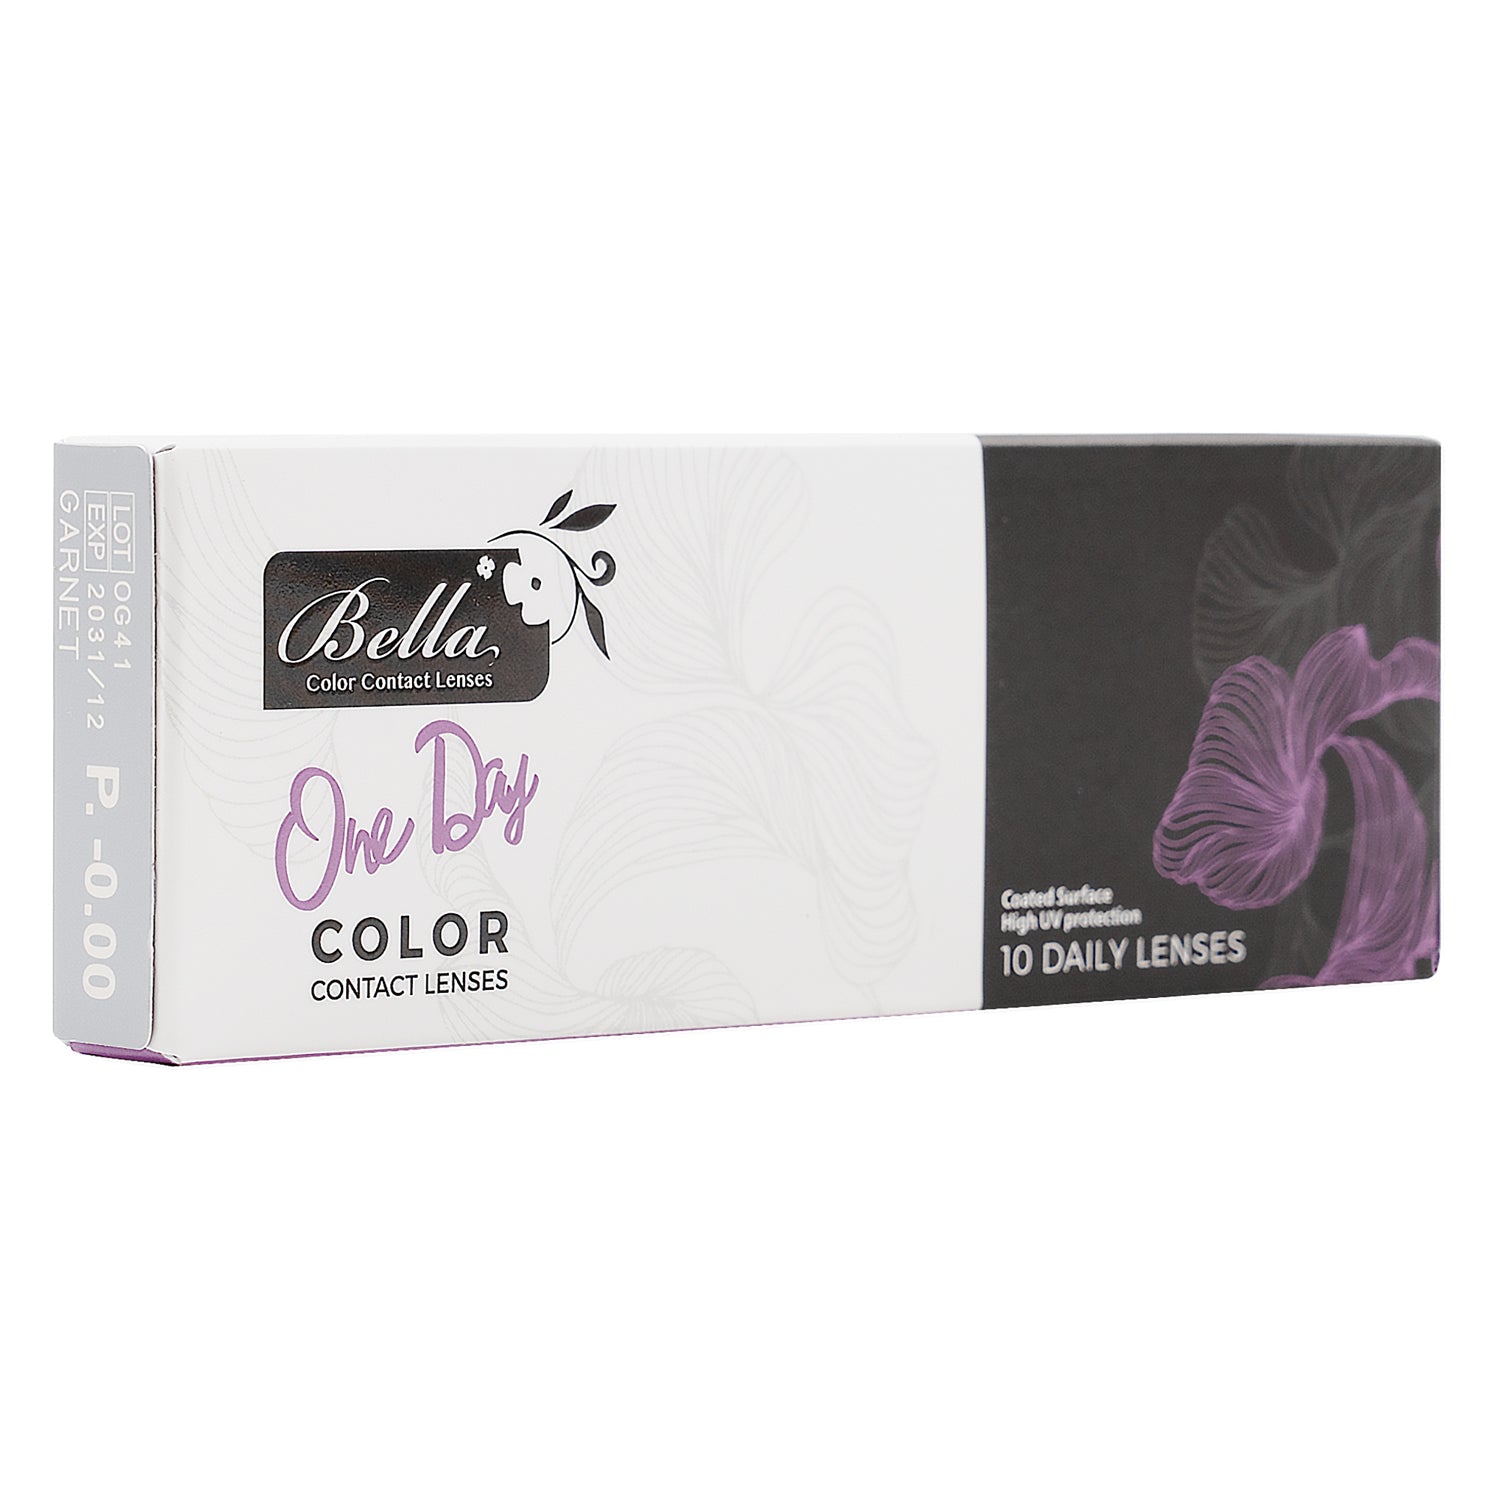 Bella Dye One Day Color Contact Lenses - Garnet